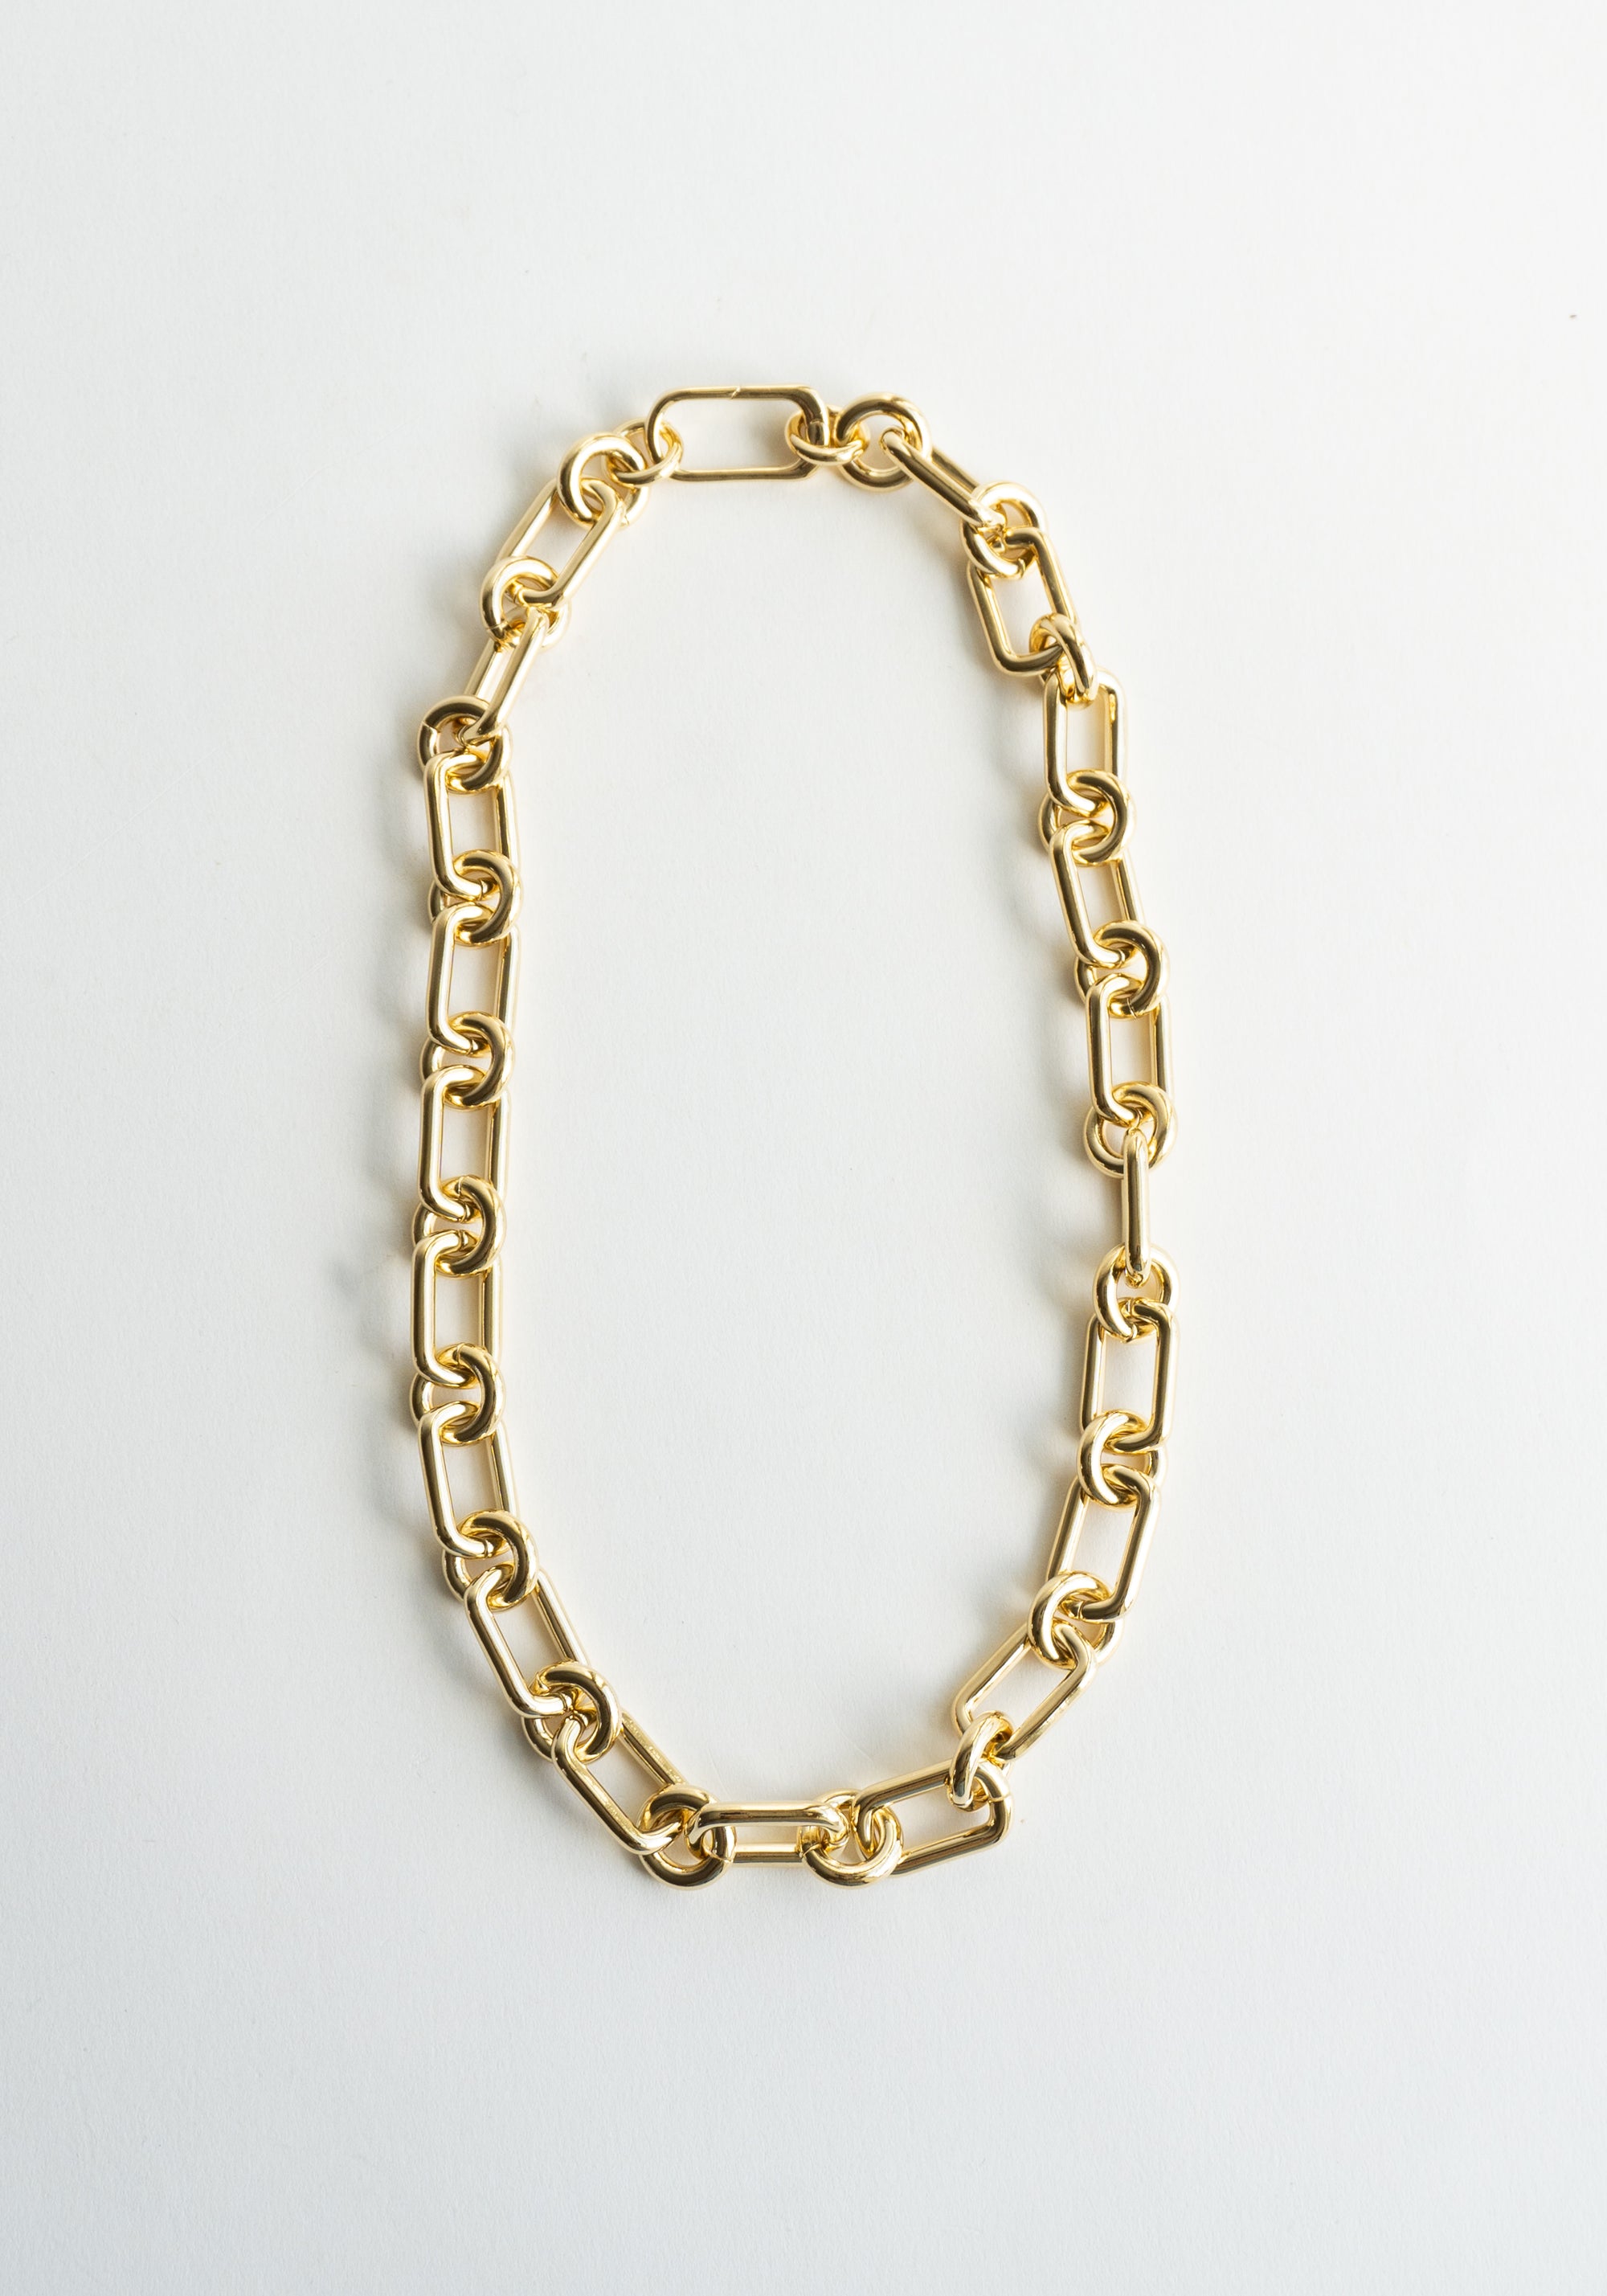 Laura Lombardi Cresca Necklace in Brass